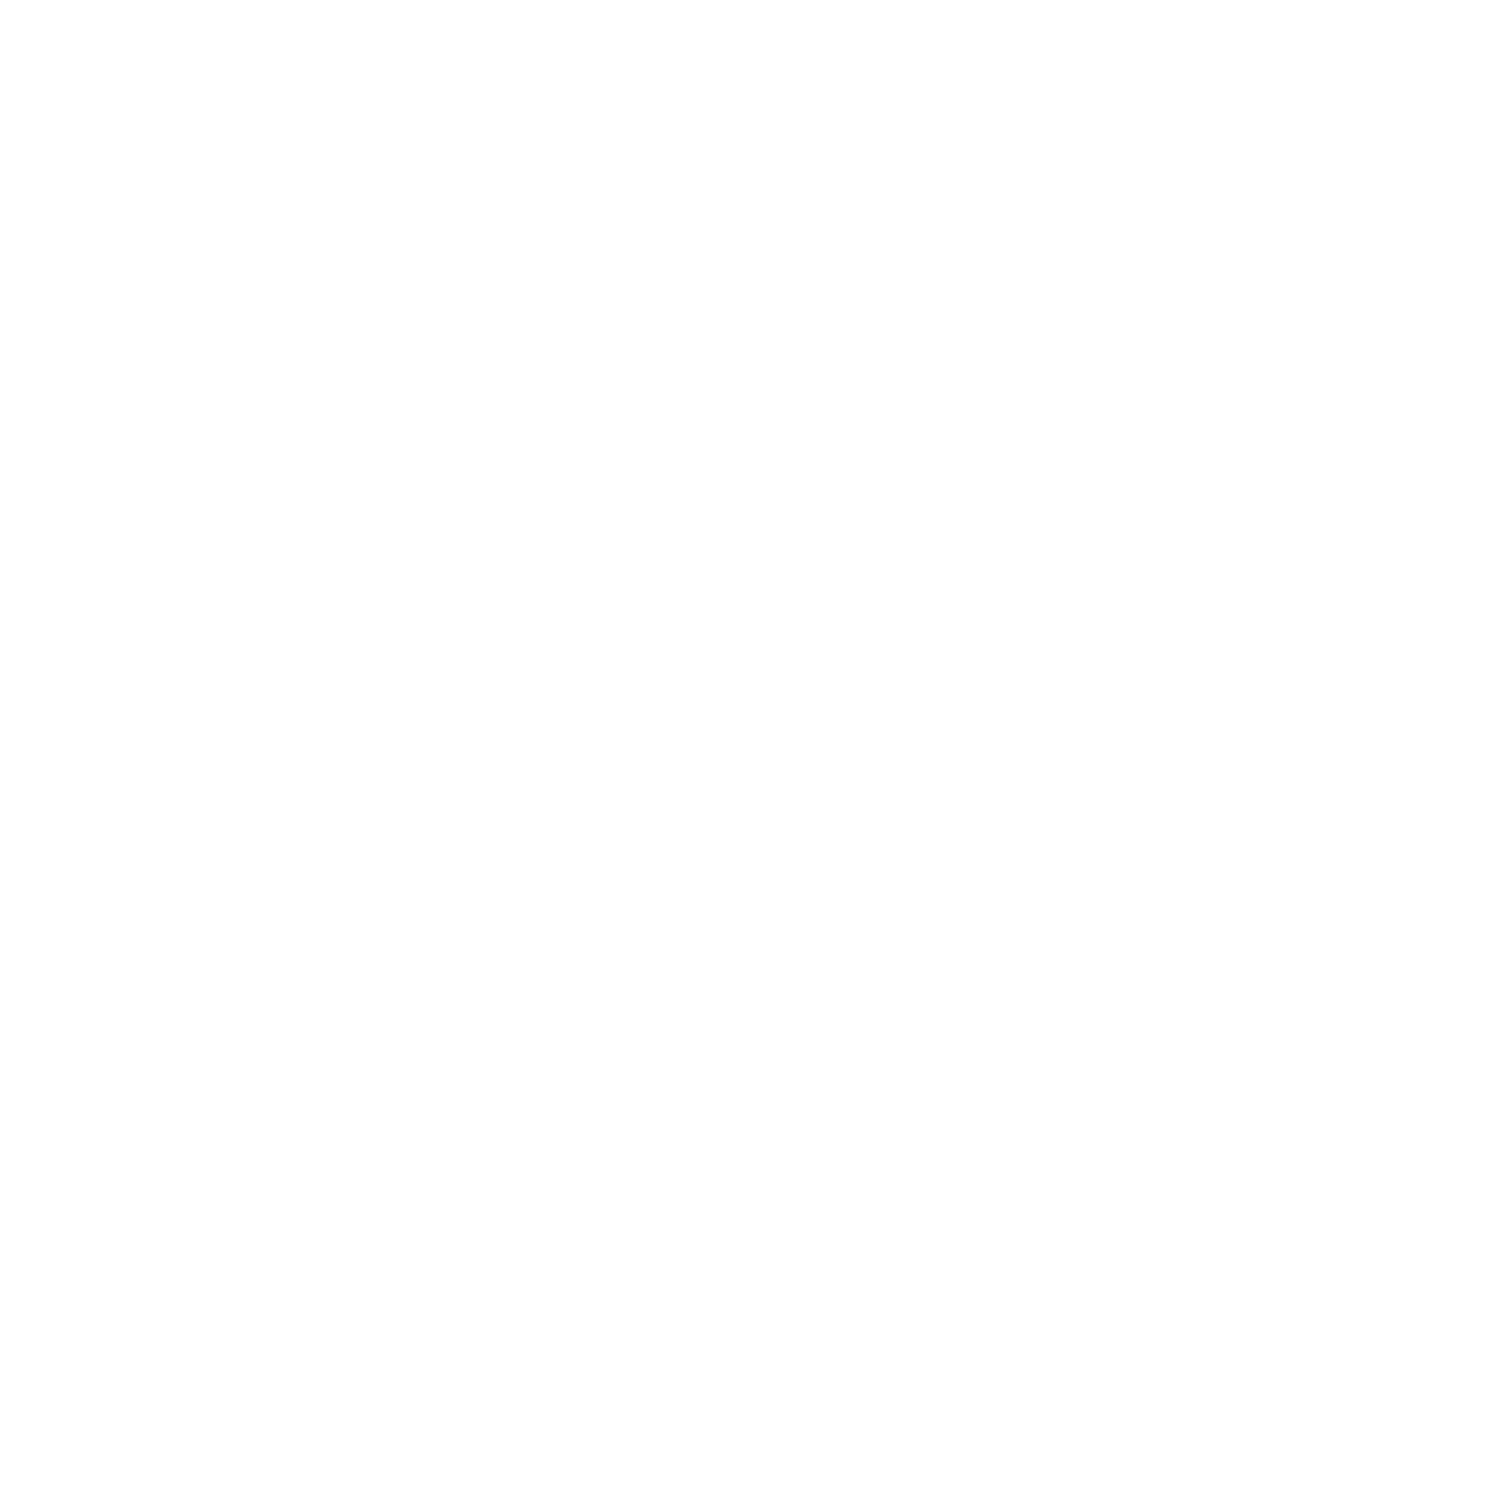 The VIP Lounge Barbershop